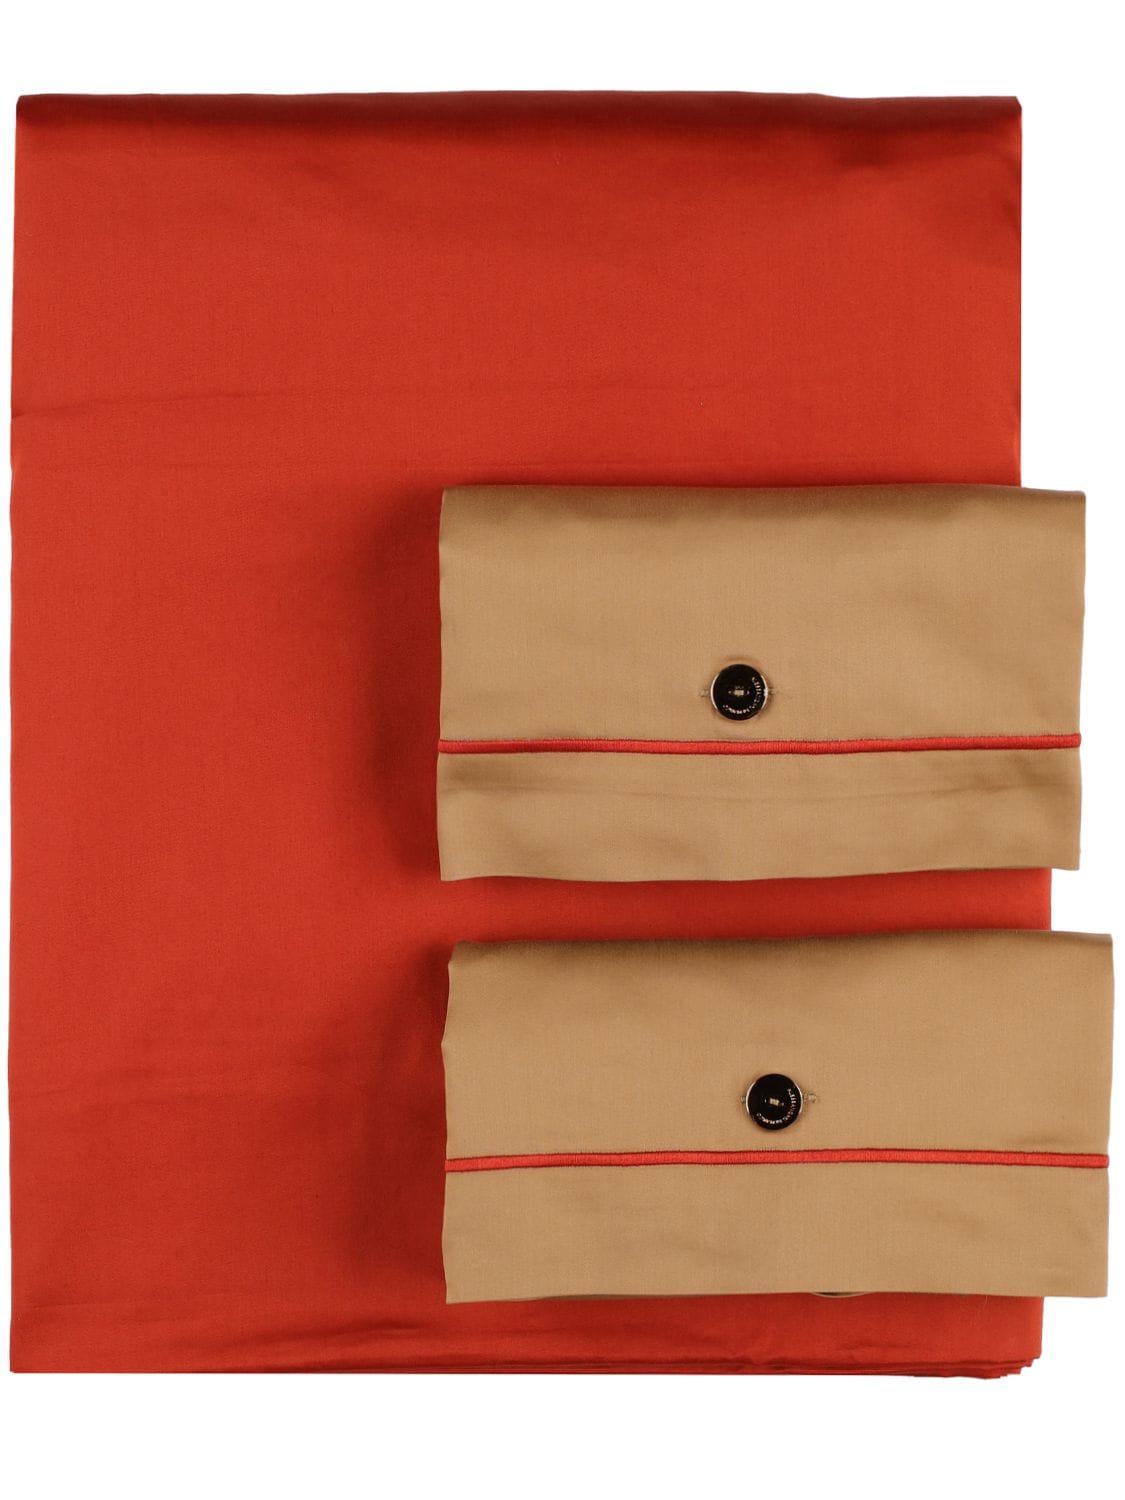 Alessandro Di Marco Duvet Cover & Pillowcases Set In Orange